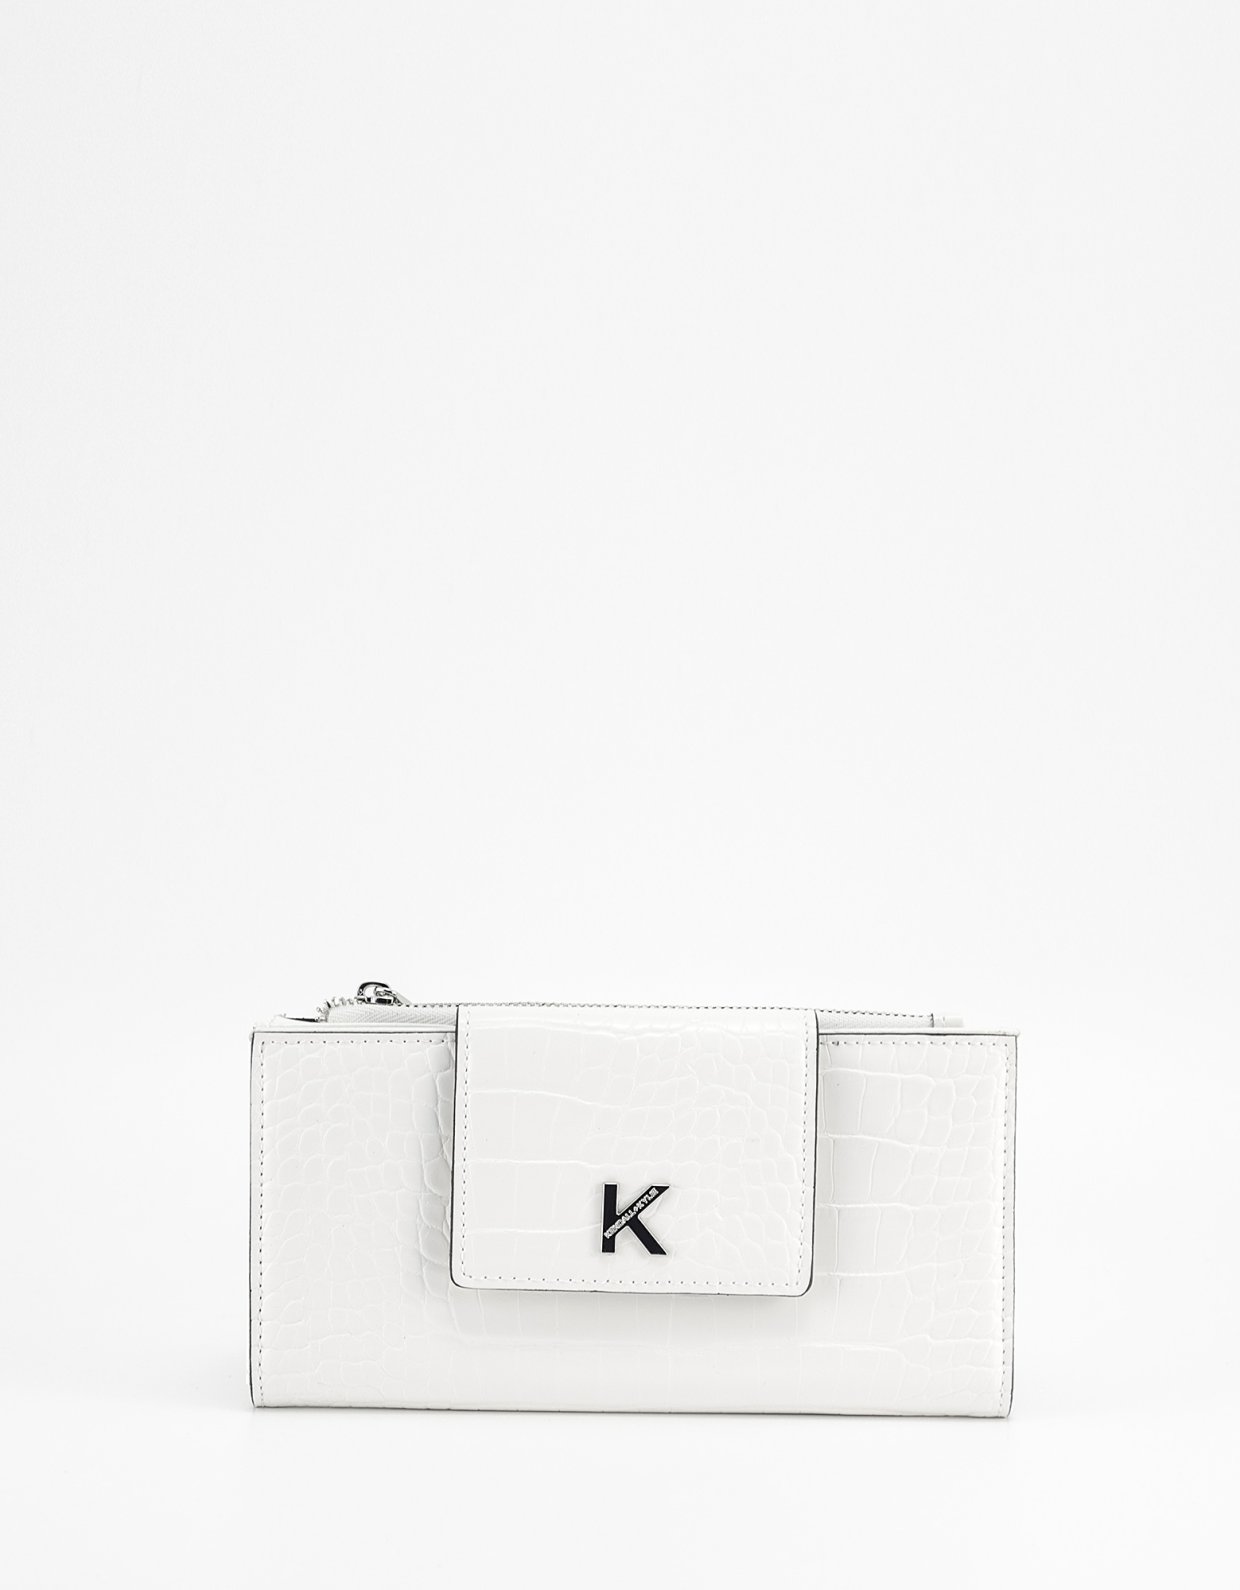 Kendall + Kylie Malibu wallet crossbody white